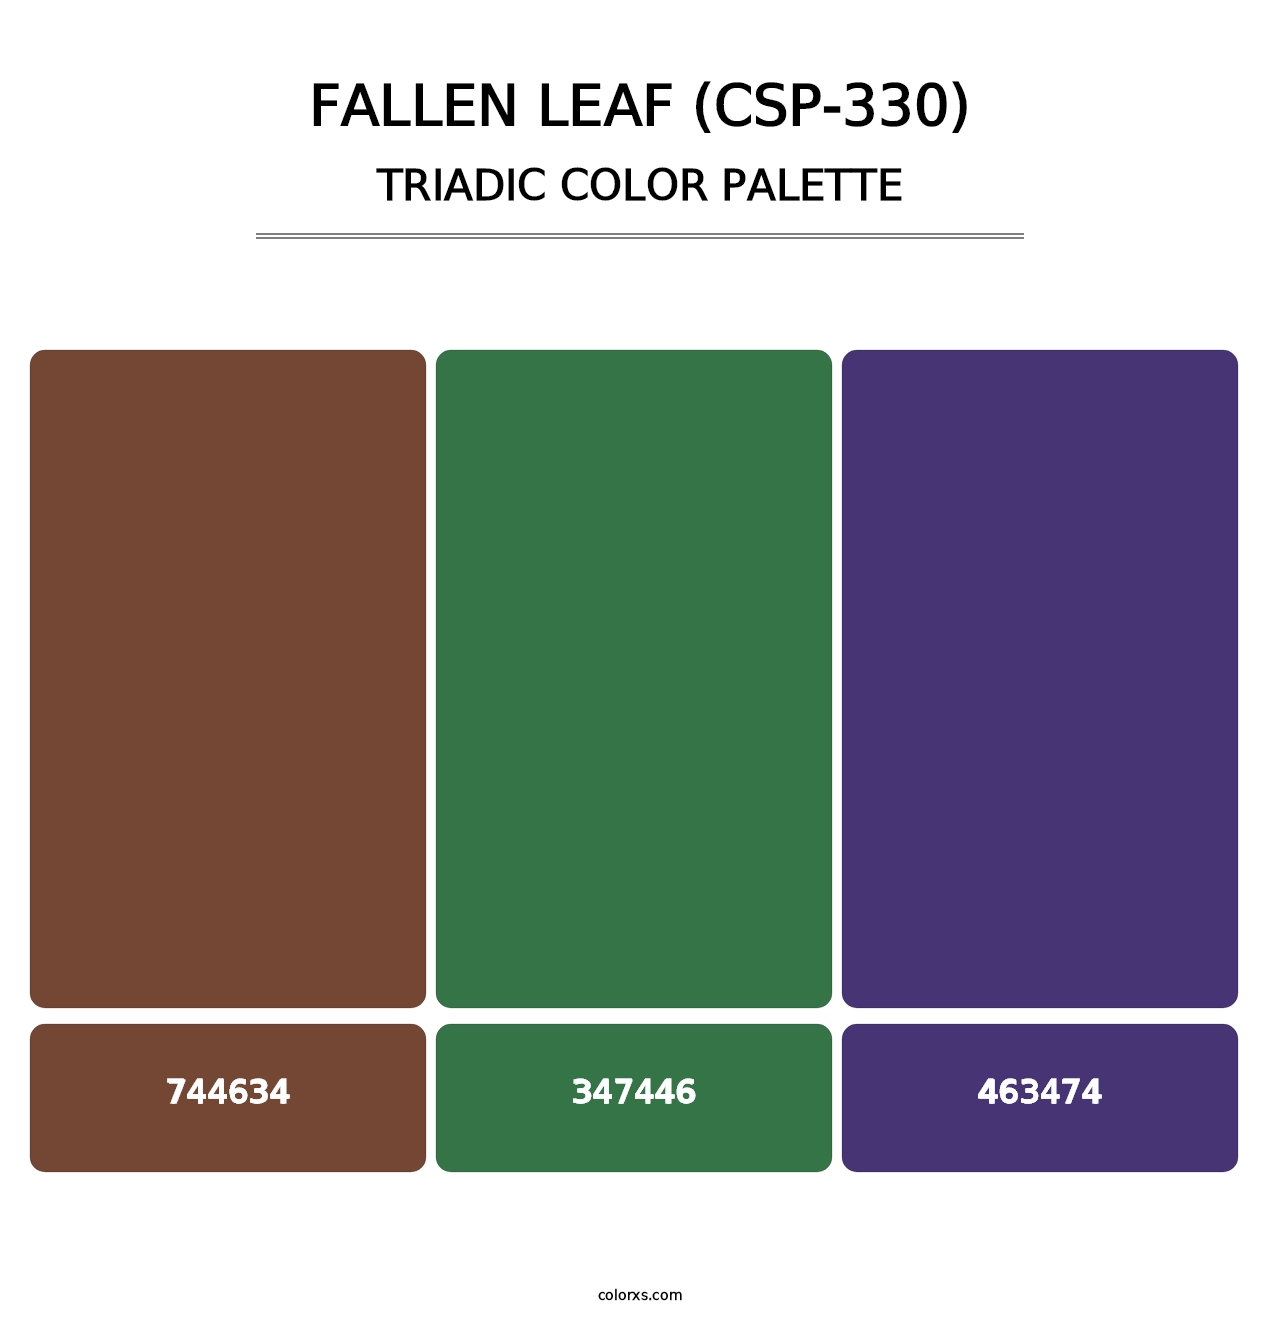 Fallen Leaf (CSP-330) - Triadic Color Palette